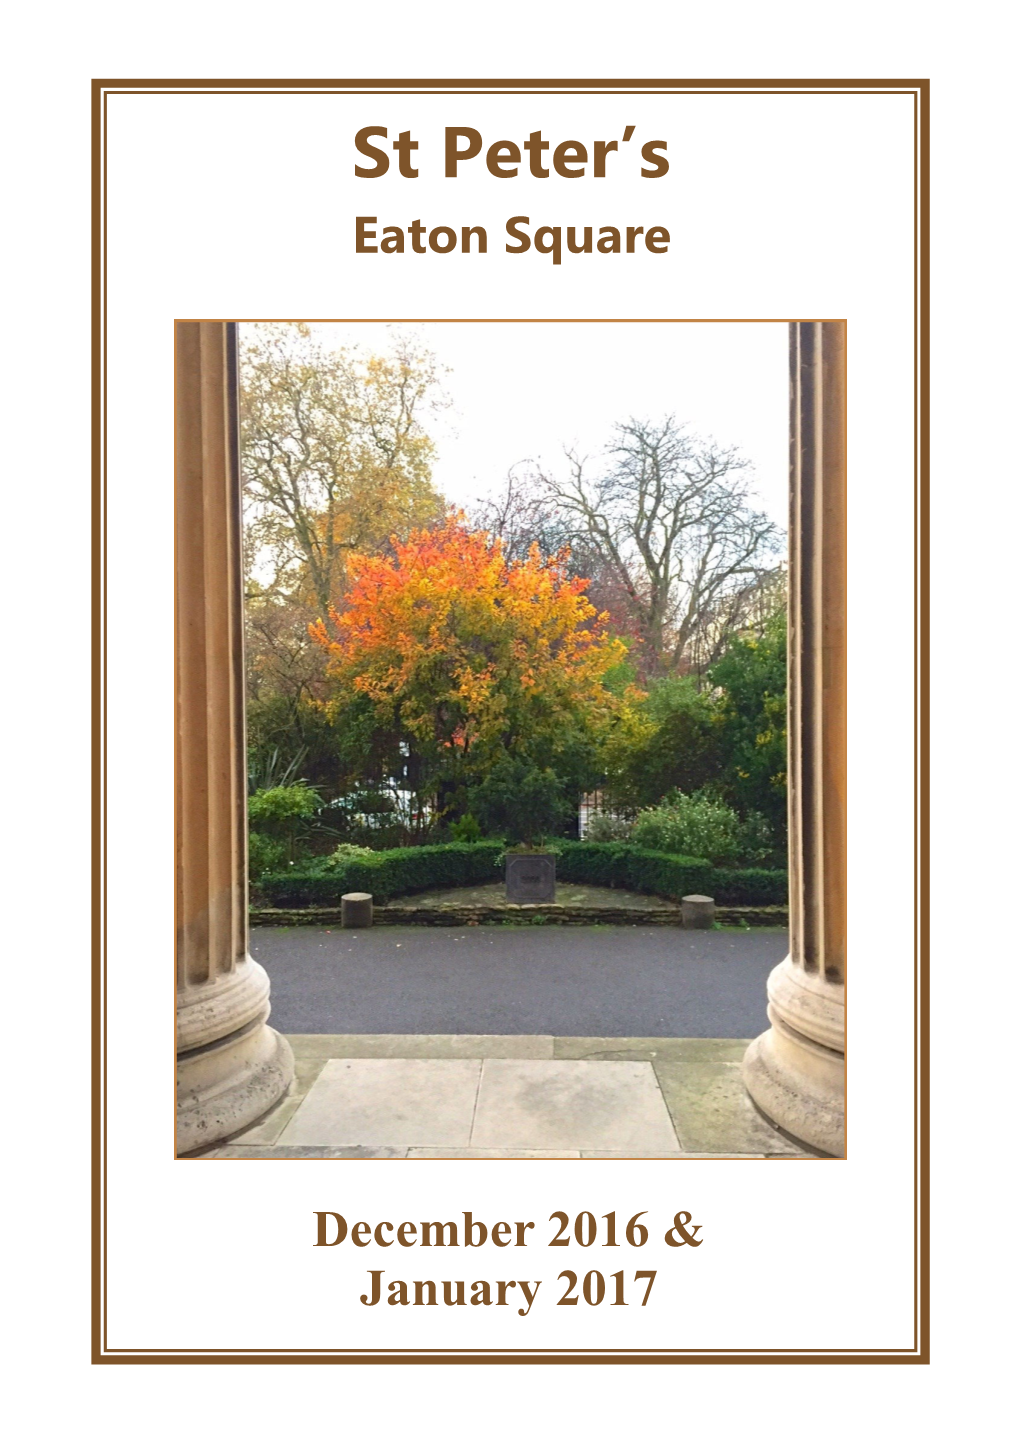 St Peter's Eaton Square